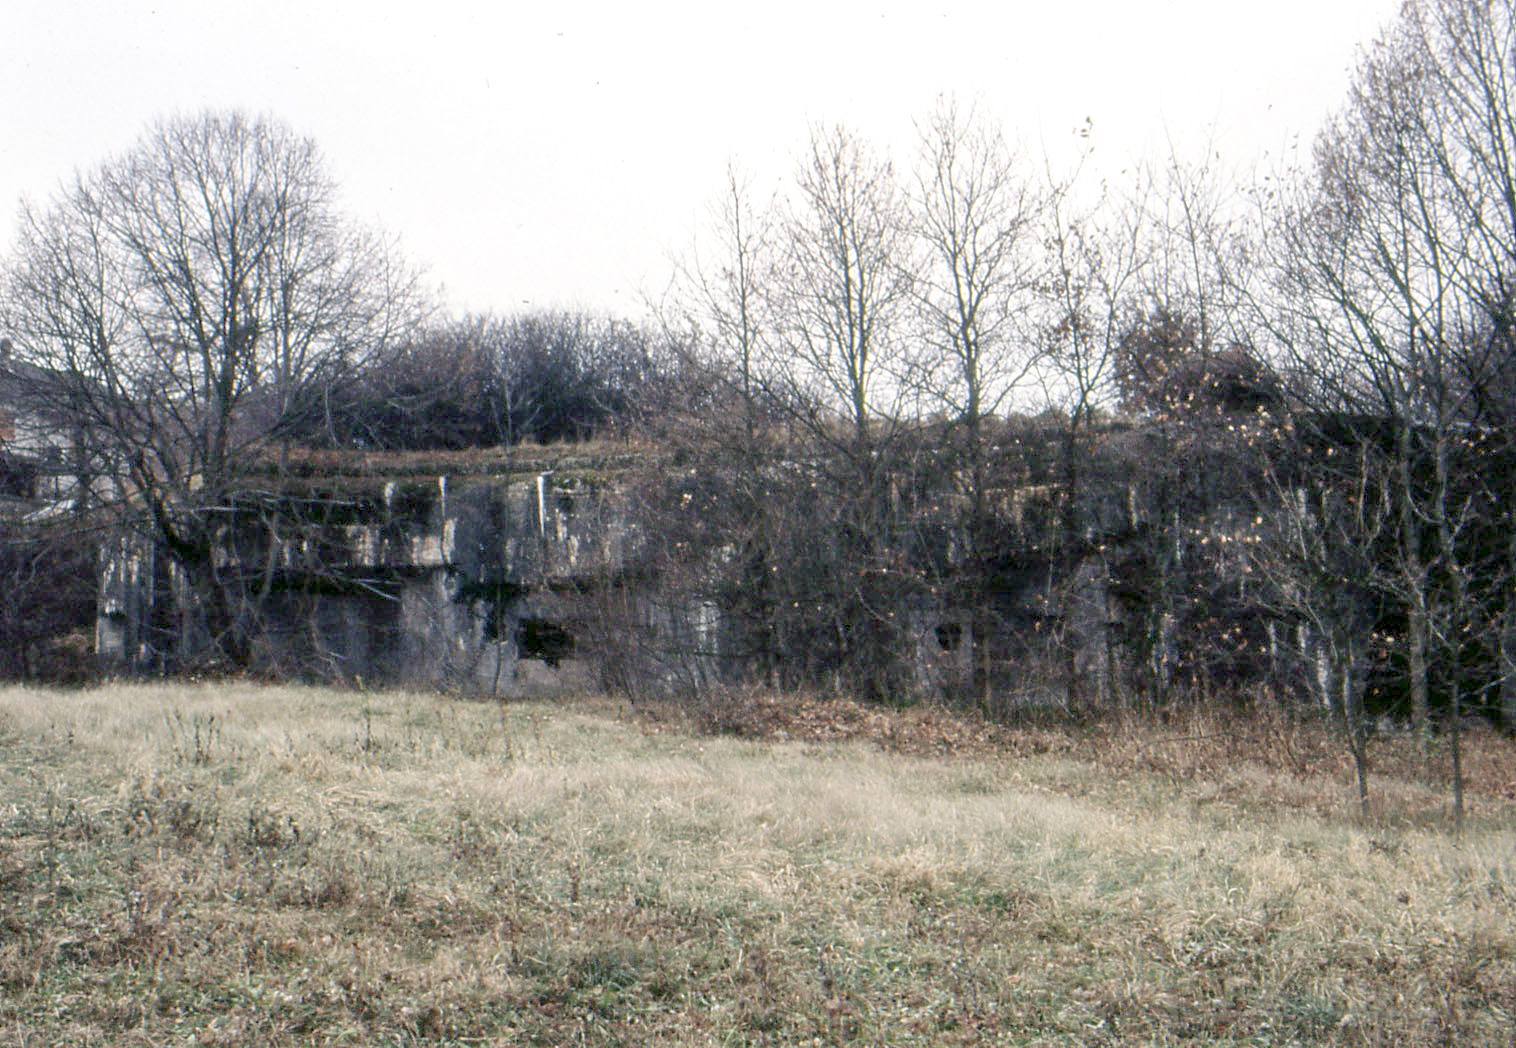 Ligne Maginot - ACA1 - TETING - (Casemate d'artillerie) - 